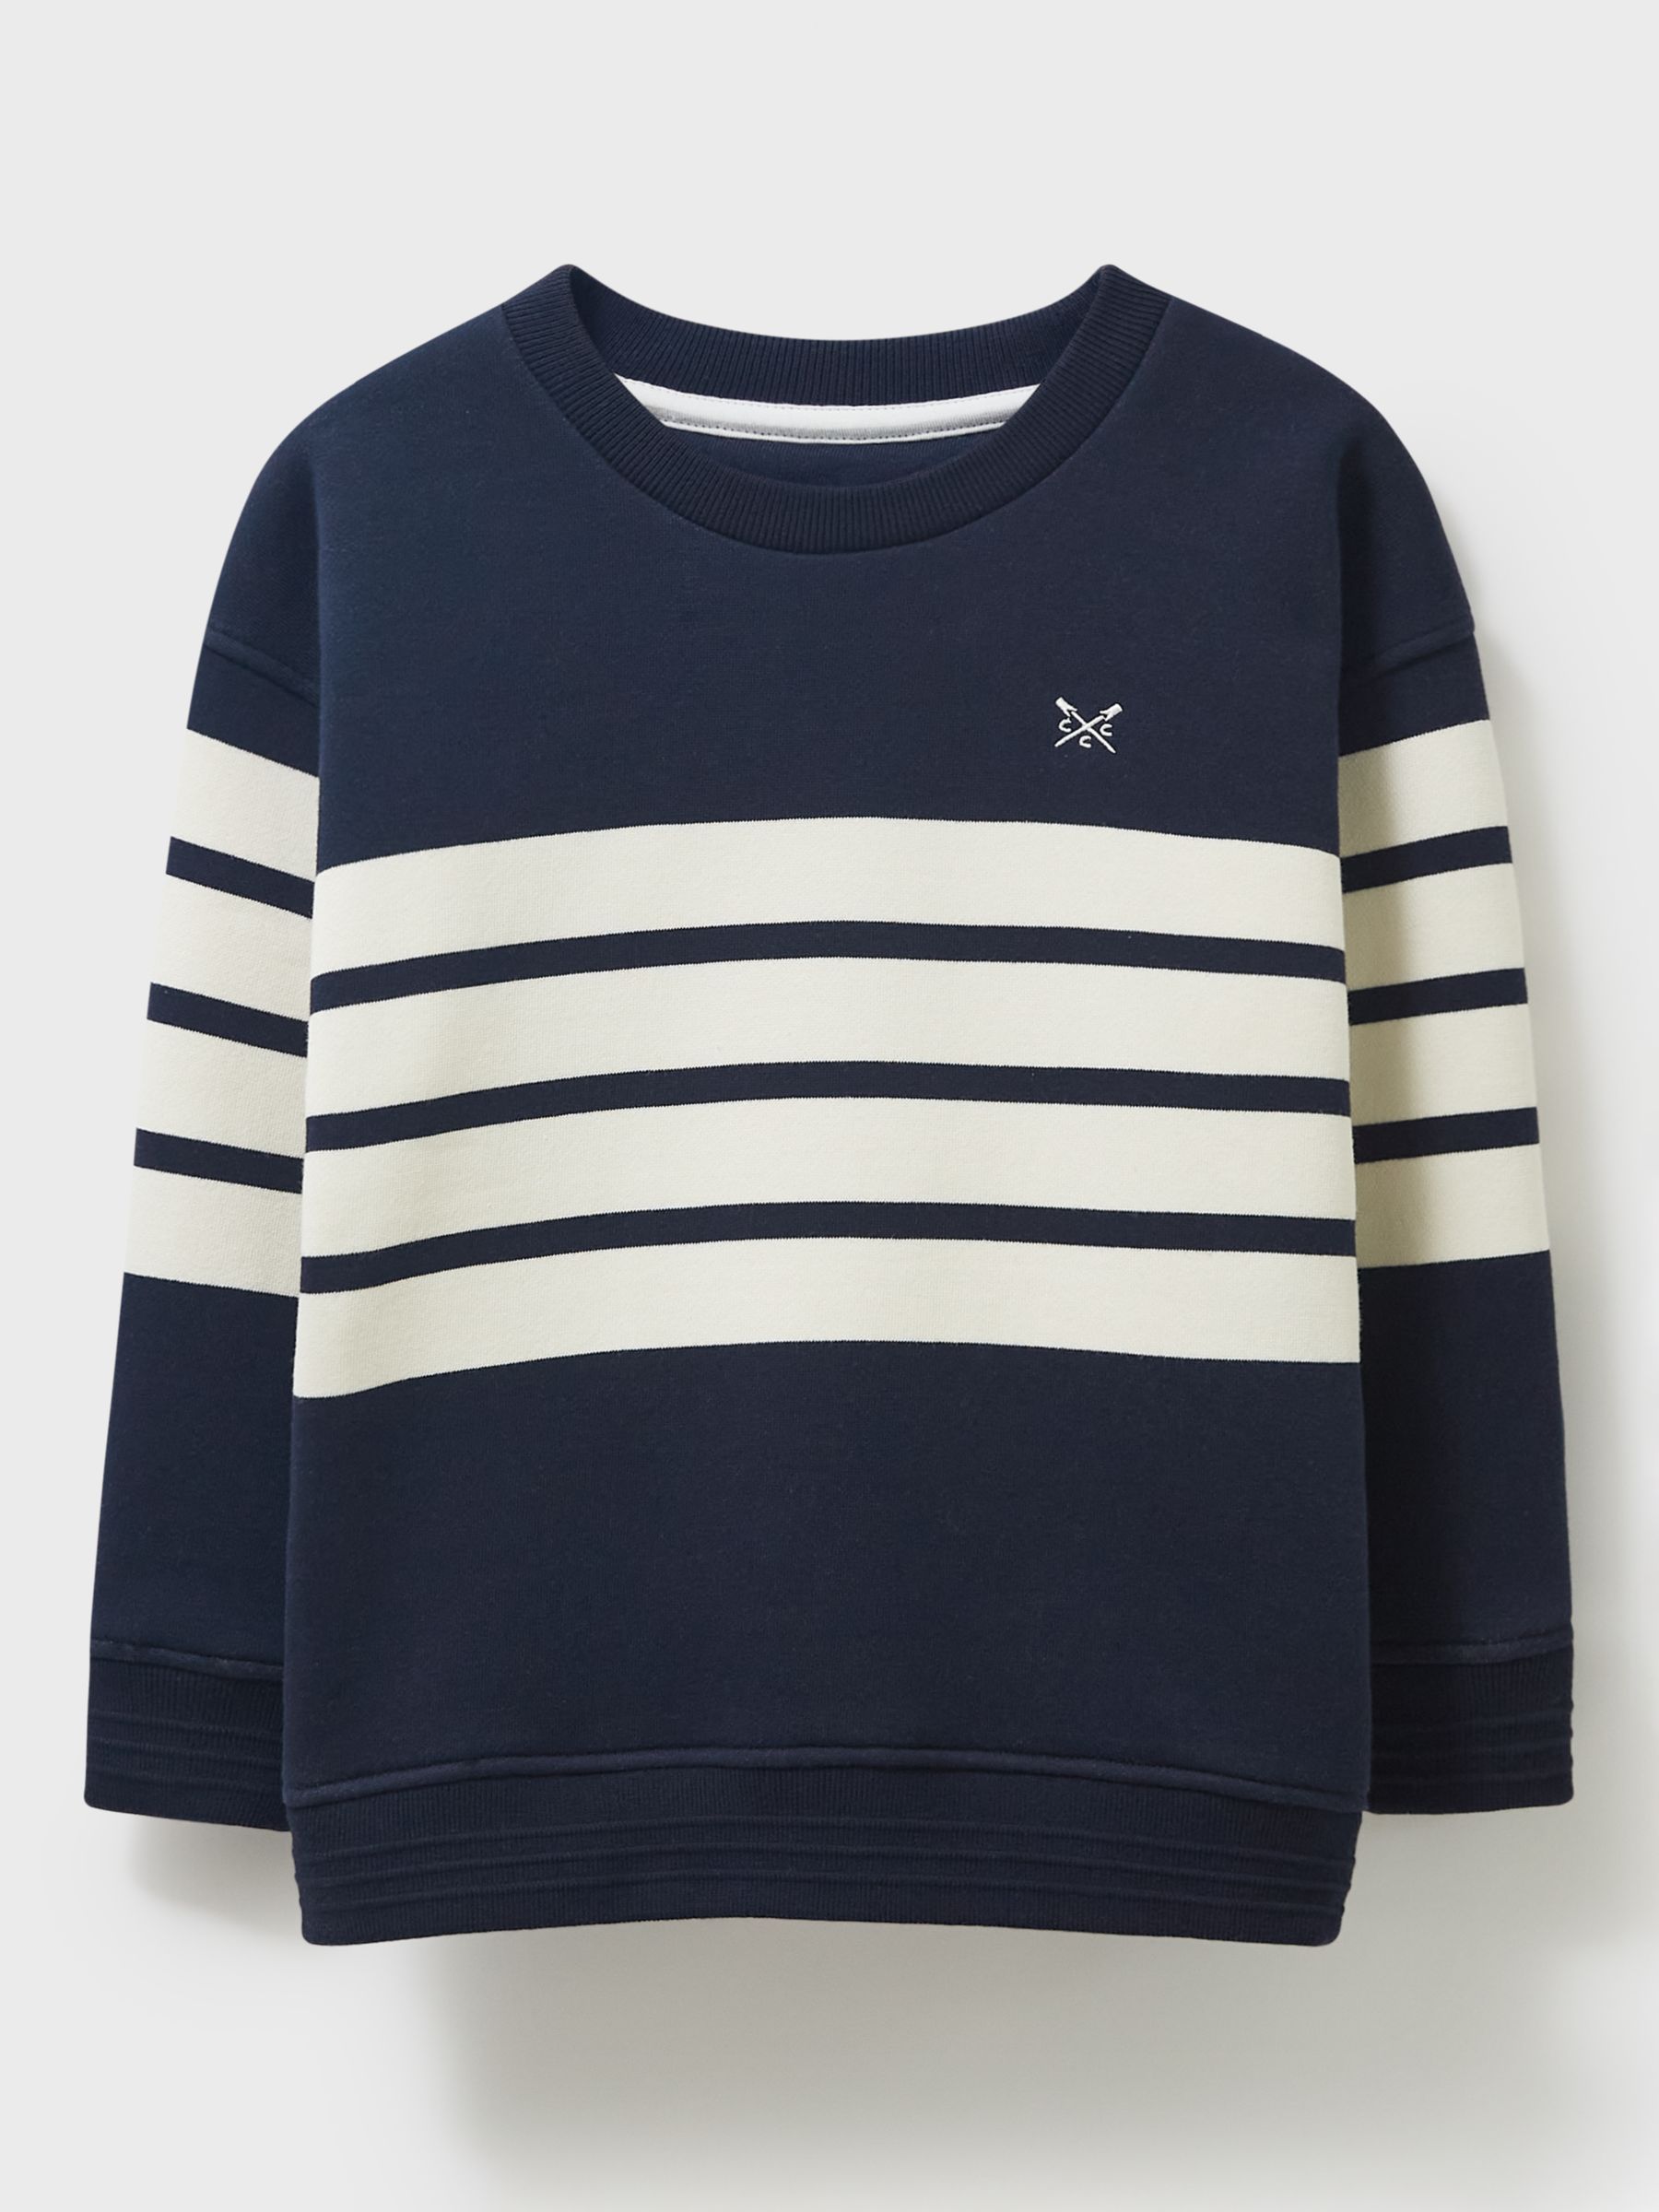 discount 77% Black KIDS FASHION Jumpers & Sweatshirts Print NoName sweatshirt 